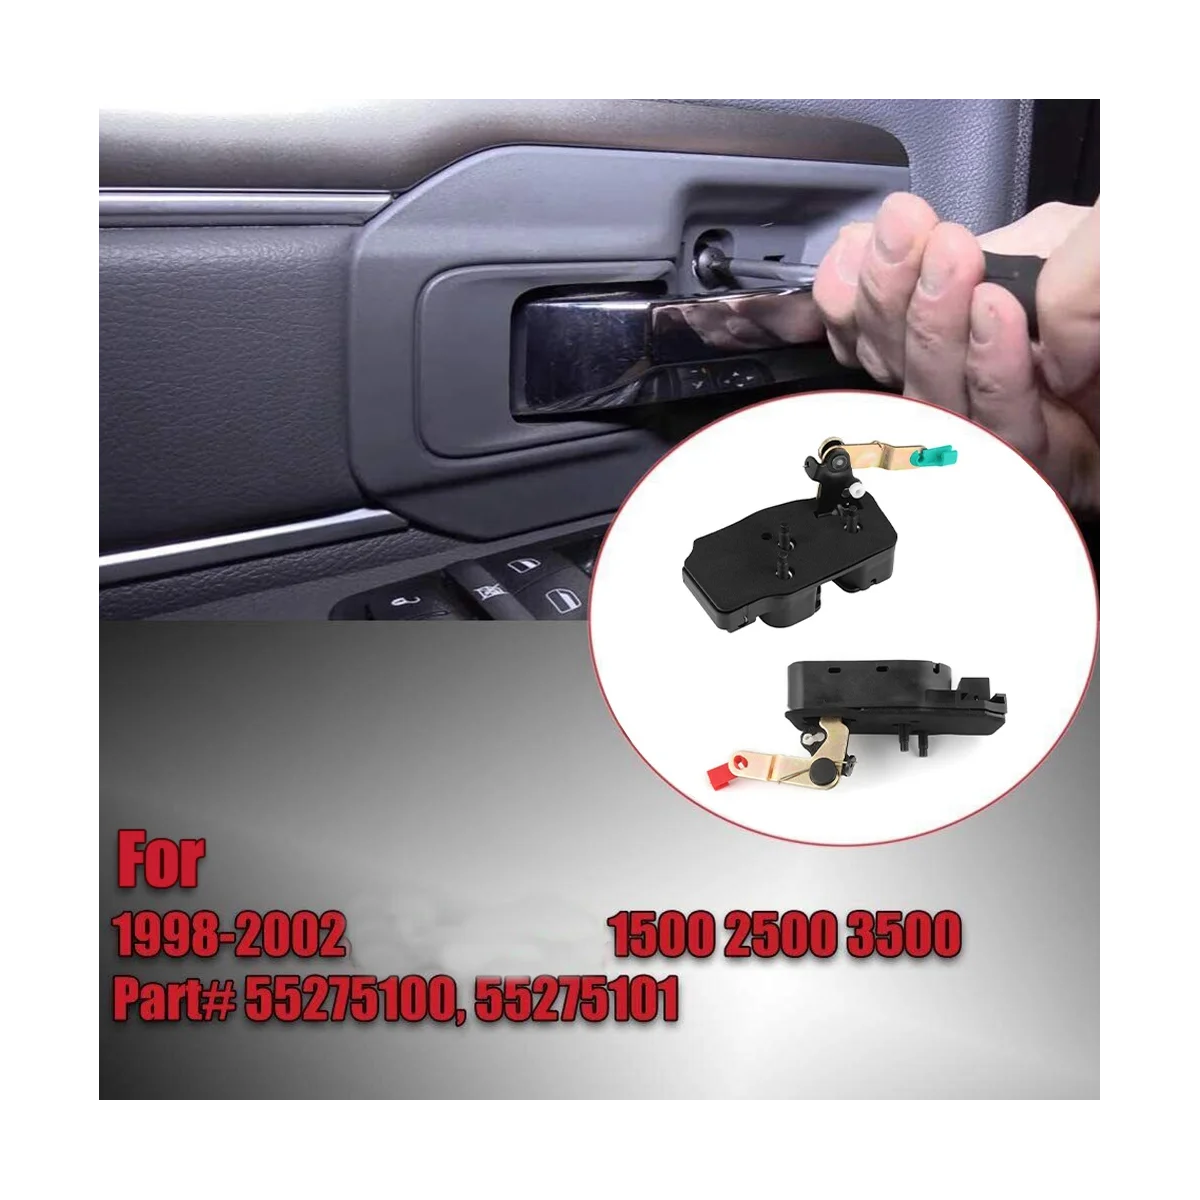 

1Pair L&R Rear Door Cab Lower Latch Lock for Ram 1500 2500 3500 1998-2002 55275101